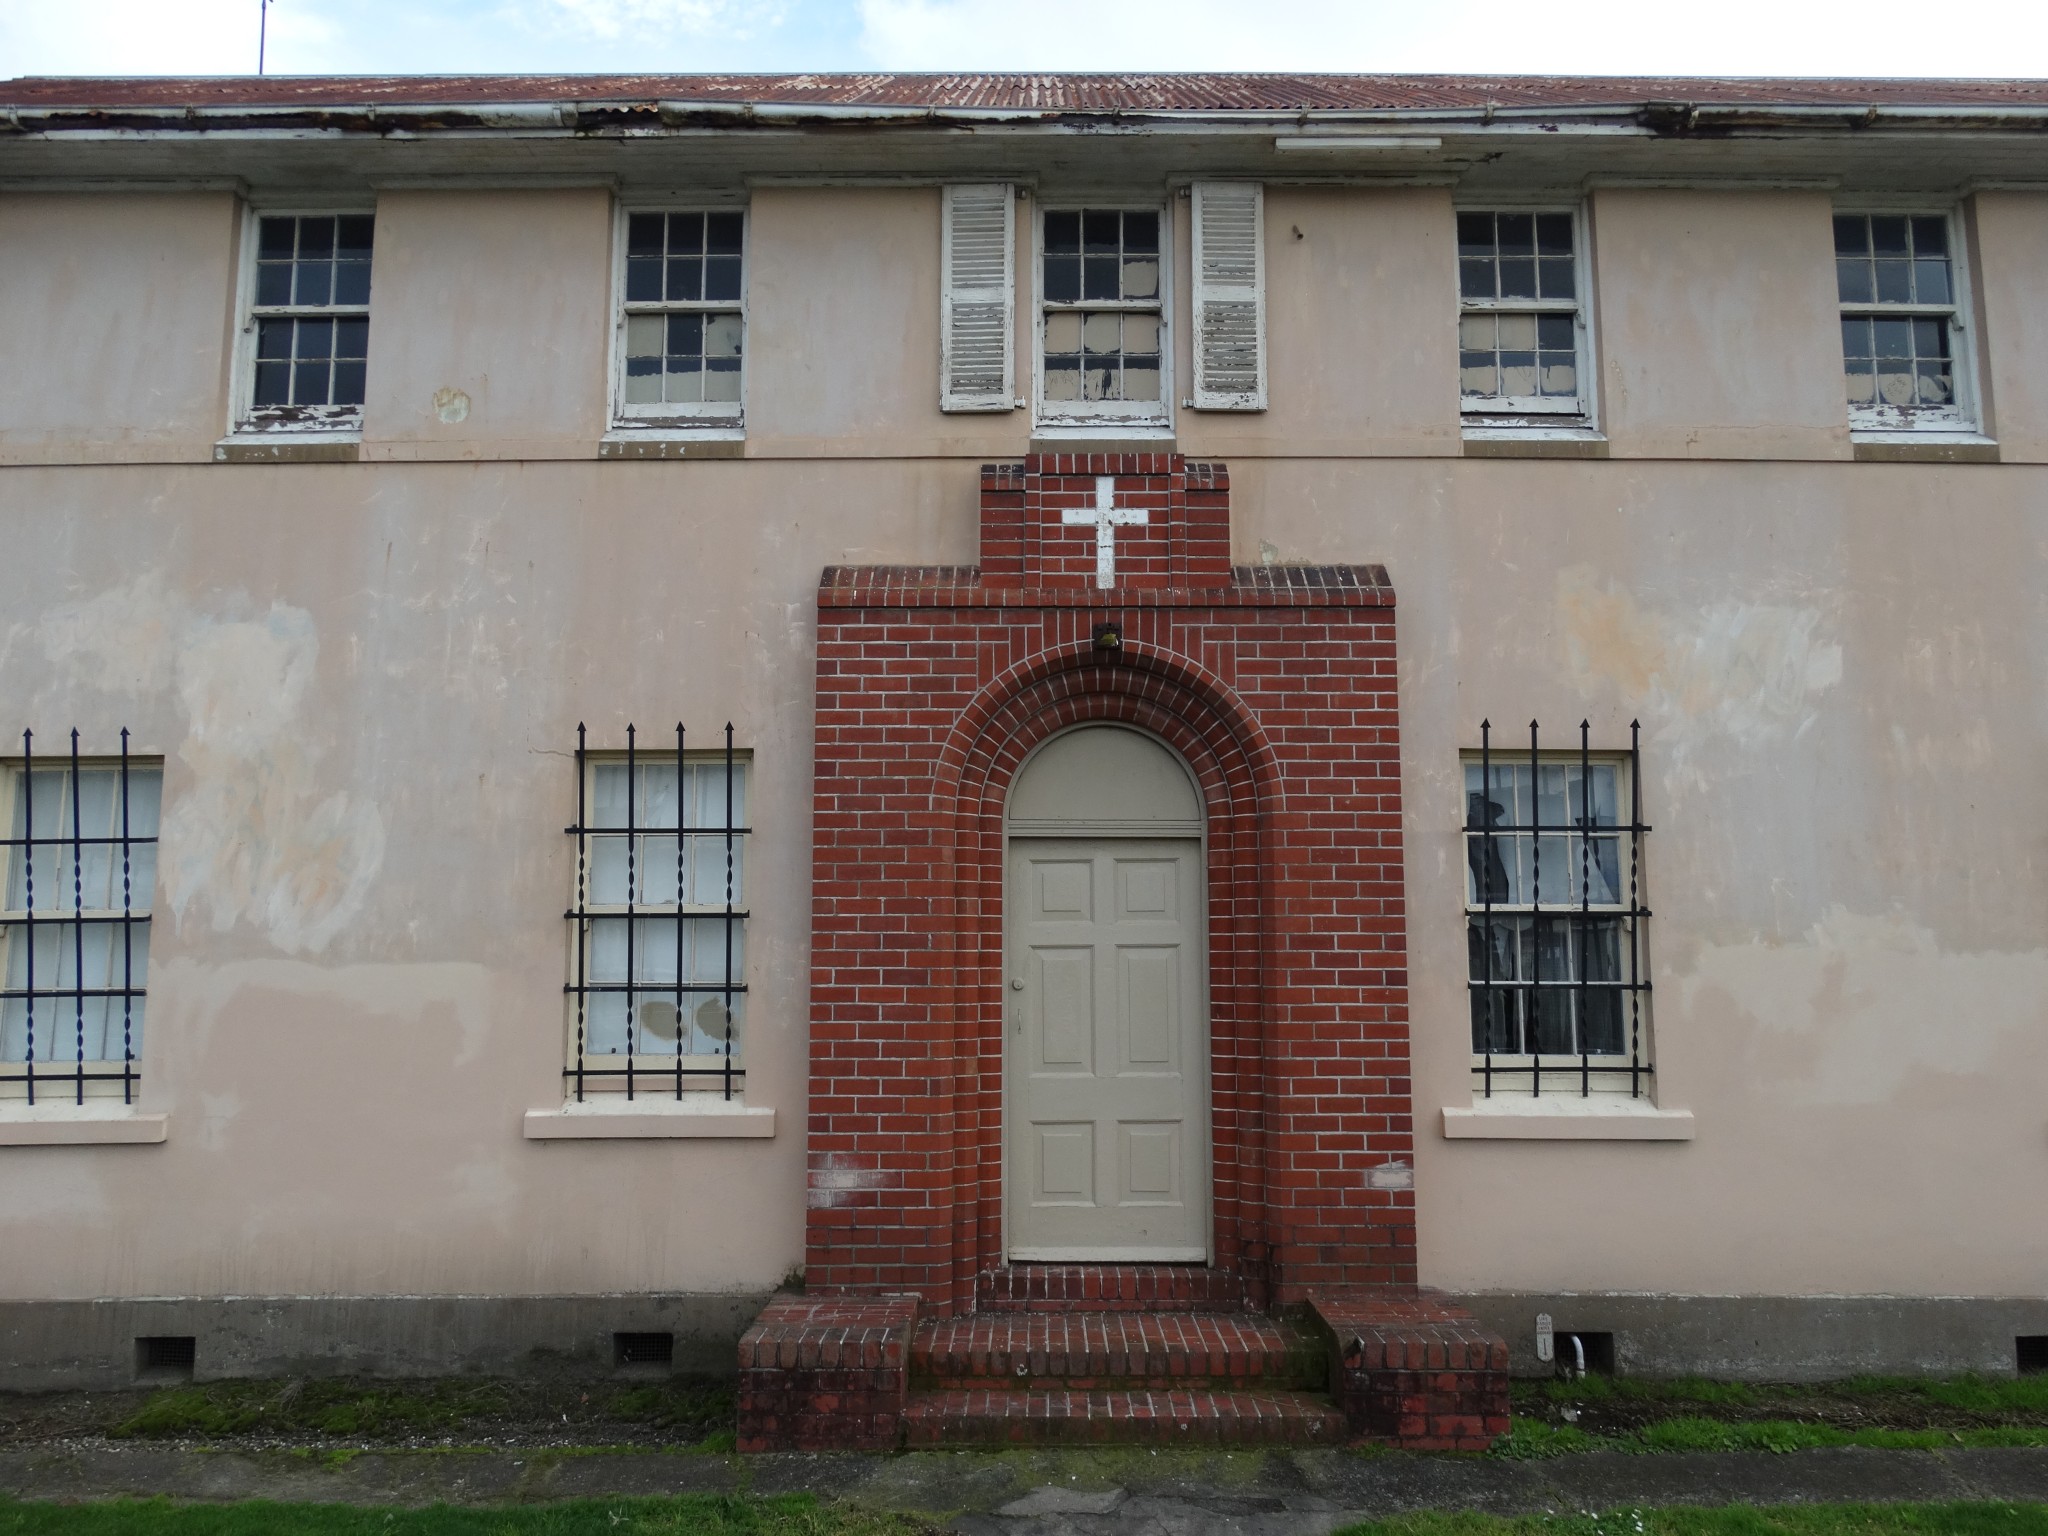 St. Anthony’s Convent – Huntly, Waikato